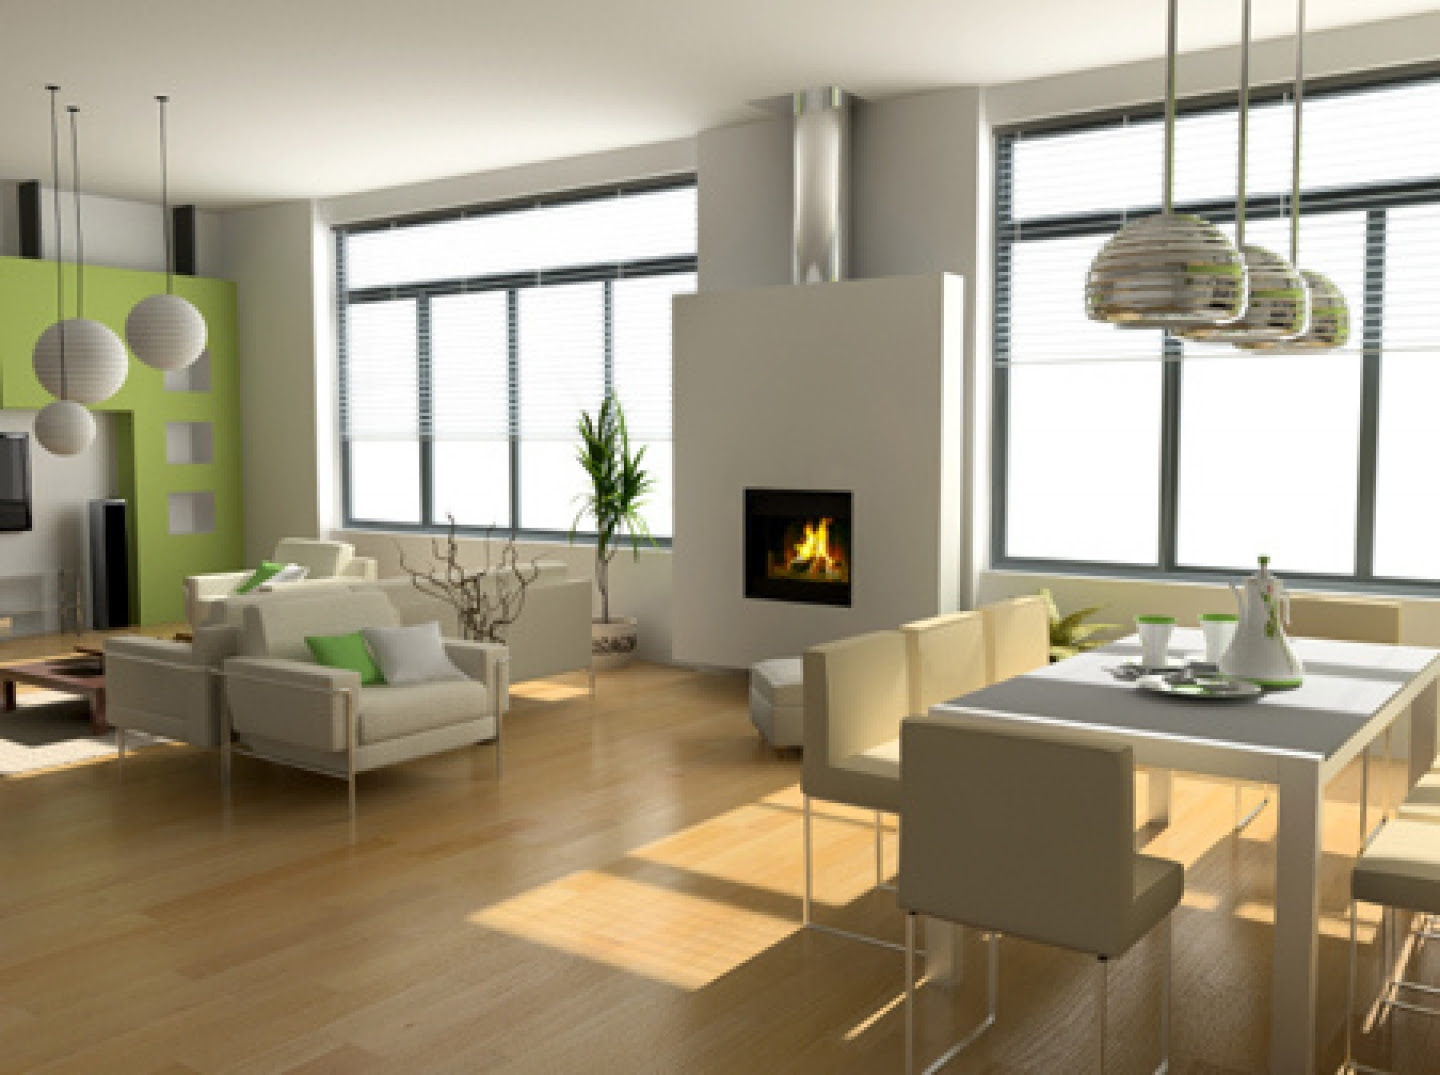 25 Modern Living Room Decor Ideas - The WoW Style